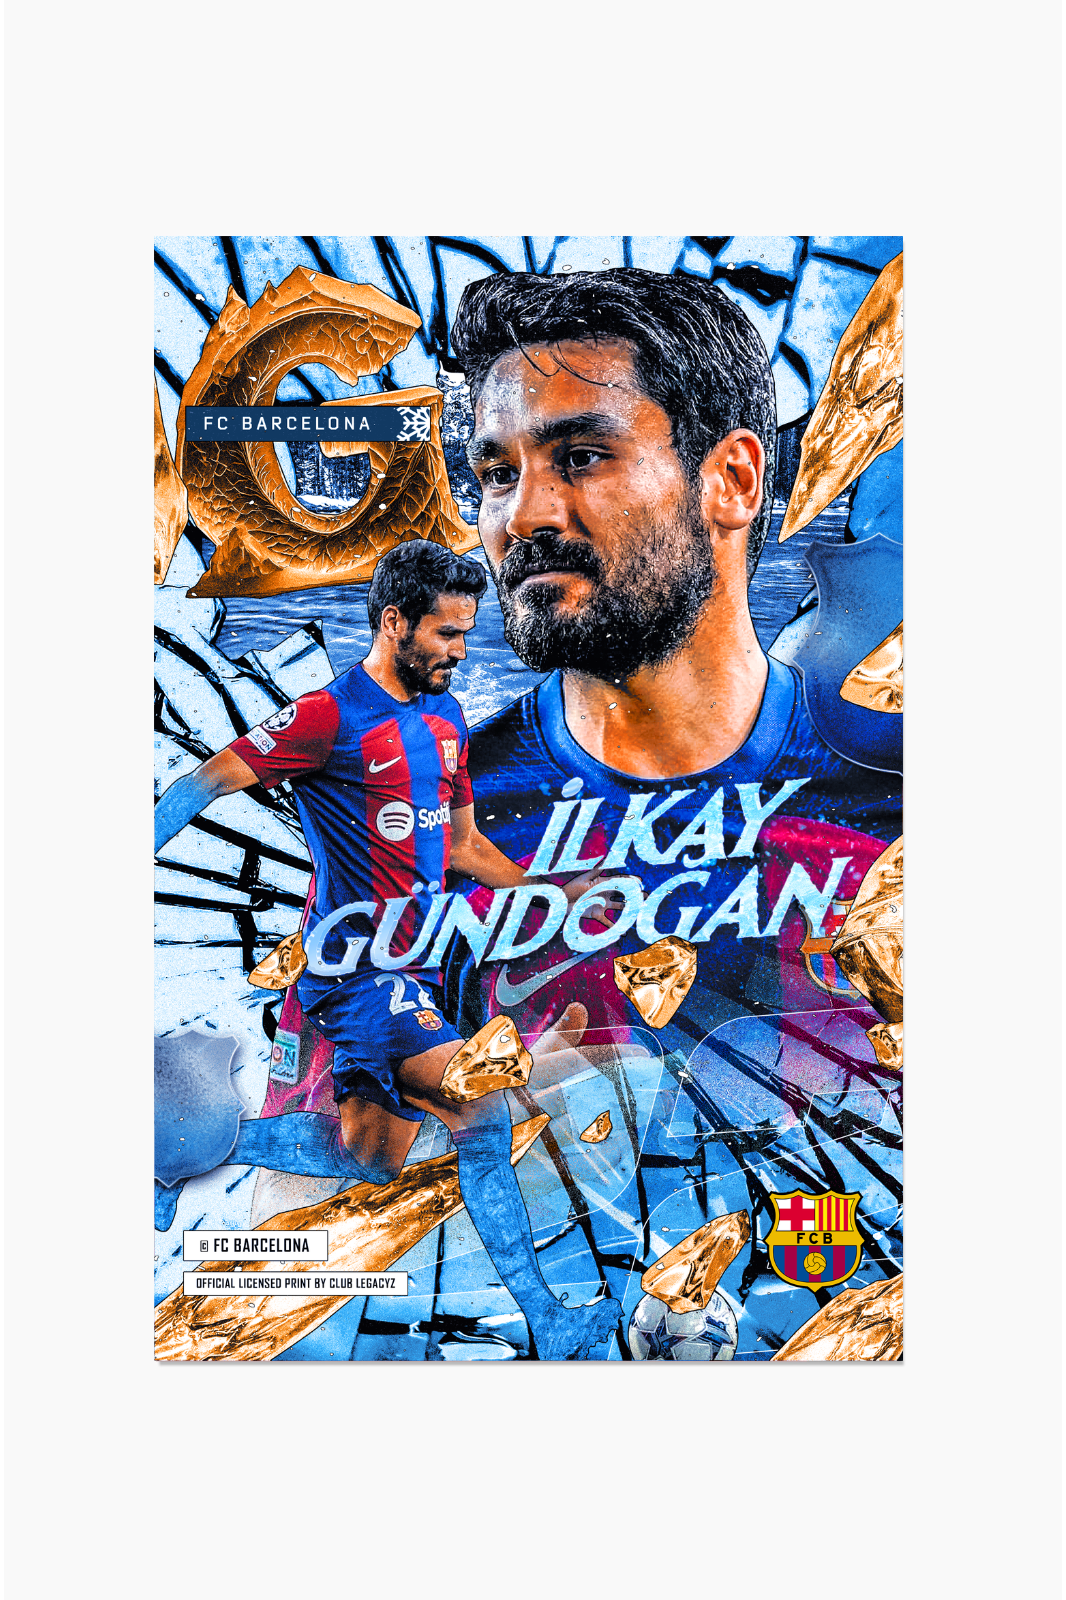 FC Barcelona - İlkay Gündogan Frozen poster limited to 100